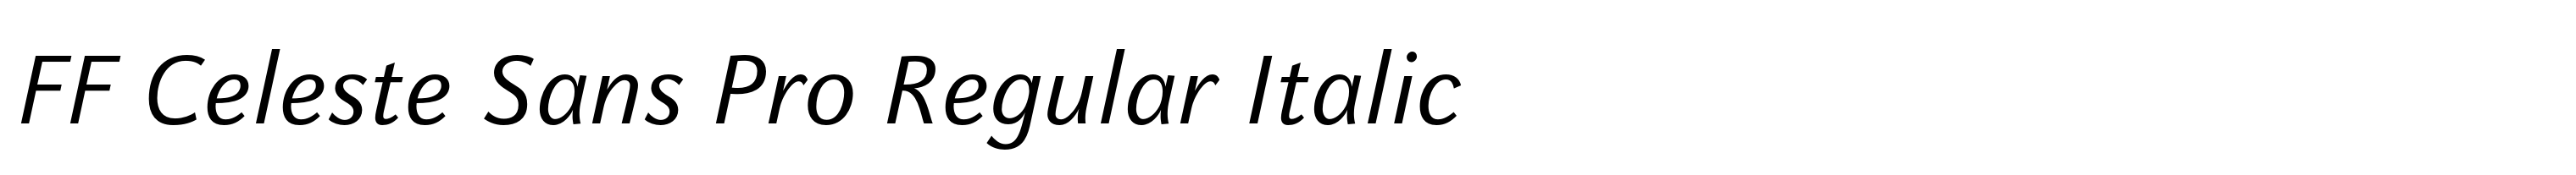 FF Celeste Sans Pro Regular Italic